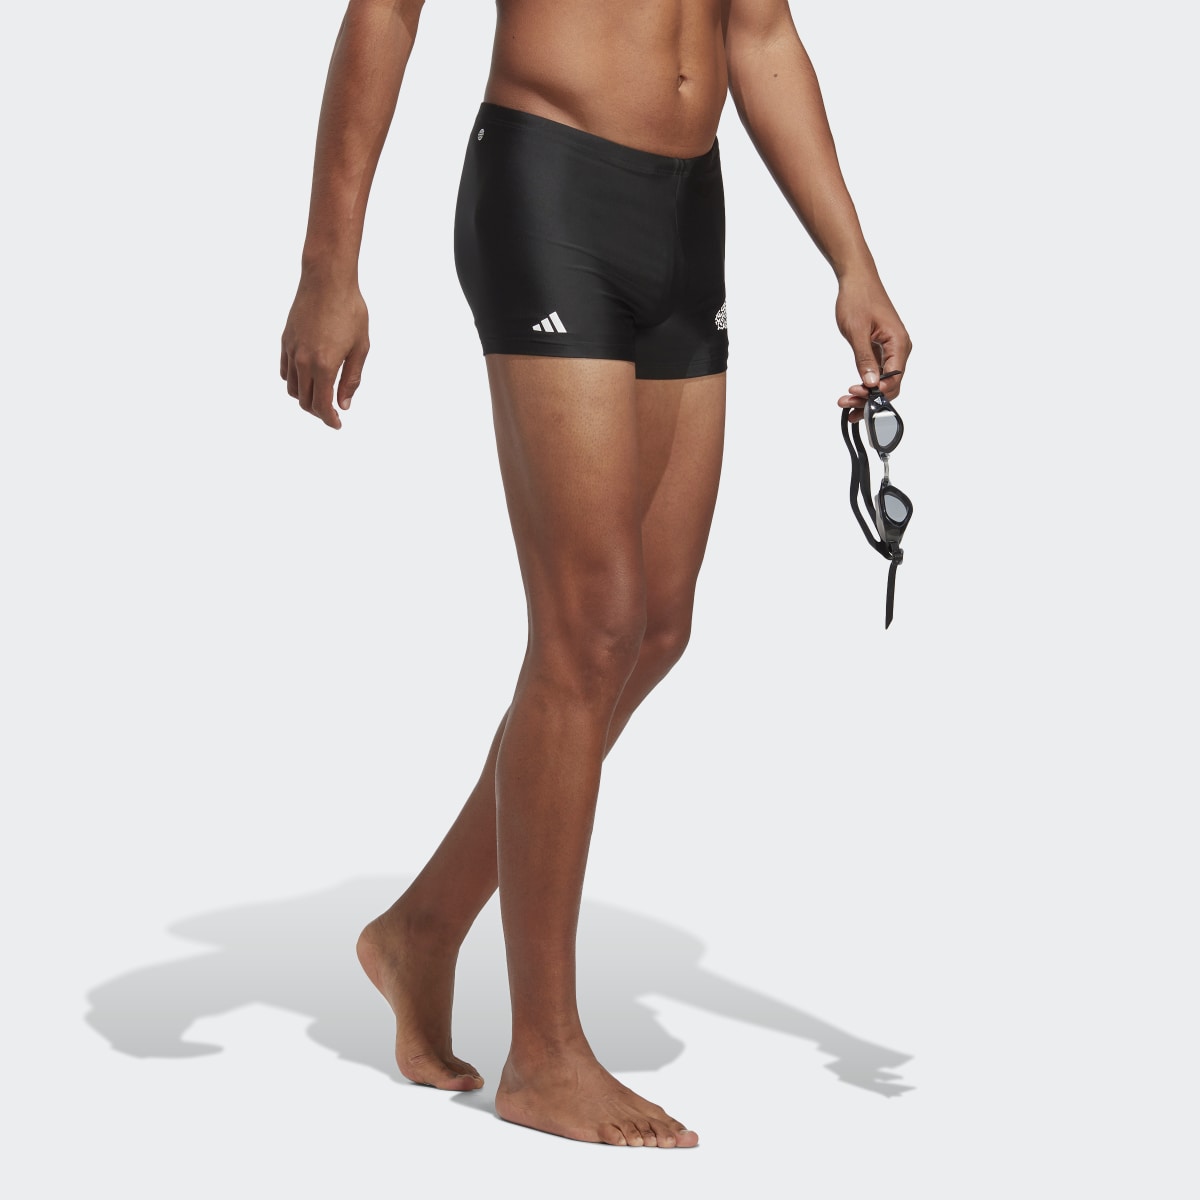 Adidas Branded Swim Boxers. 4